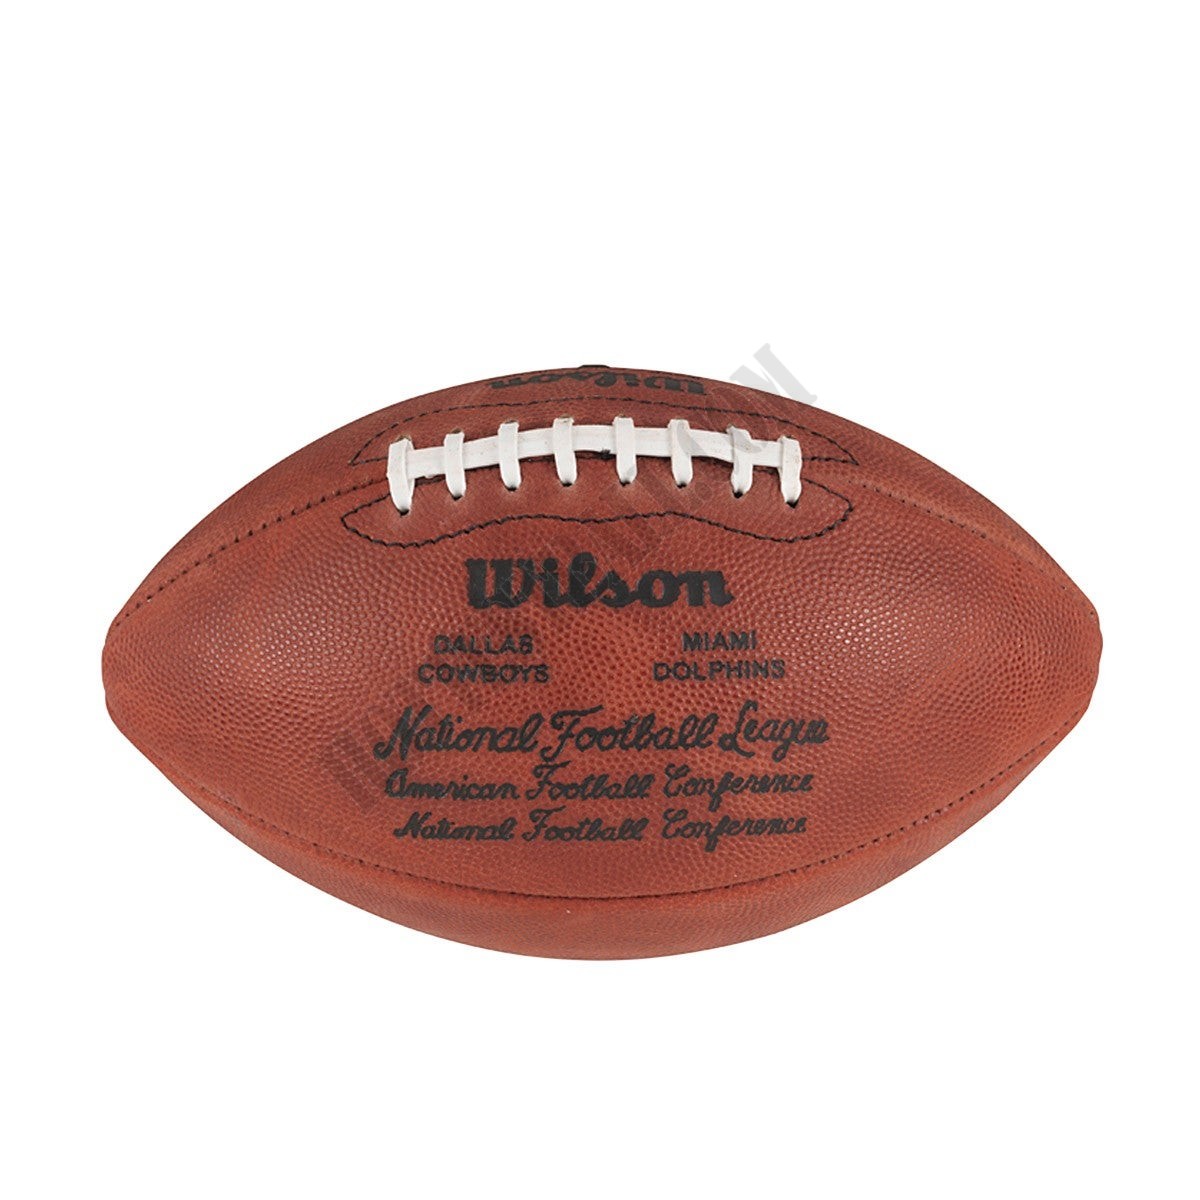 Super Bowl VI Game Football - Dallas Cowboys ● Wilson Promotions - Super Bowl VI Game Football - Dallas Cowboys ● Wilson Promotions